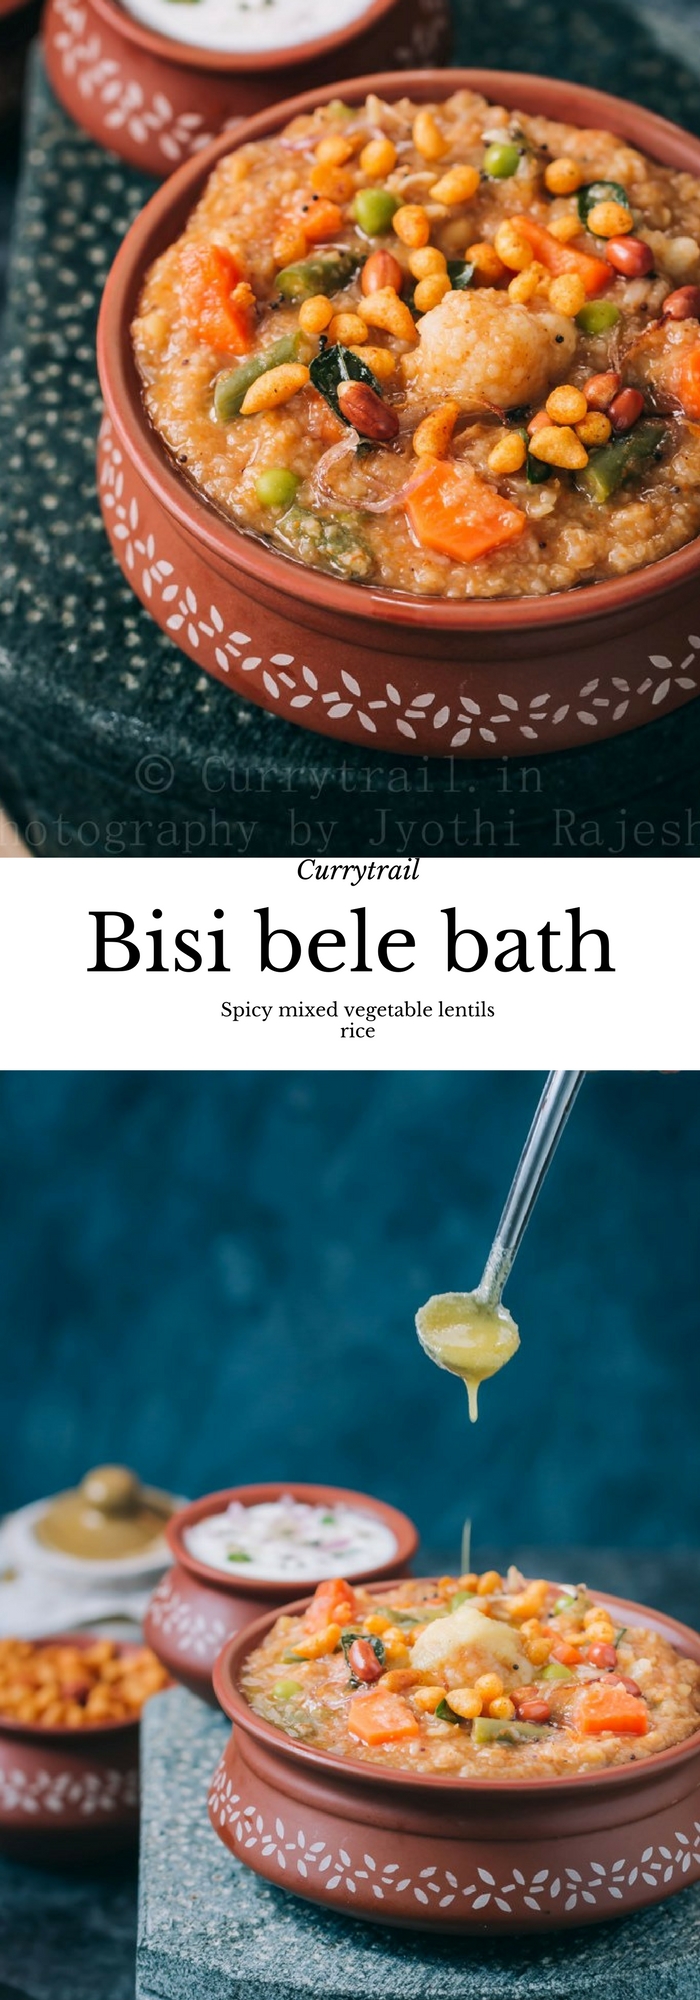 bisi bele bath with text overlay